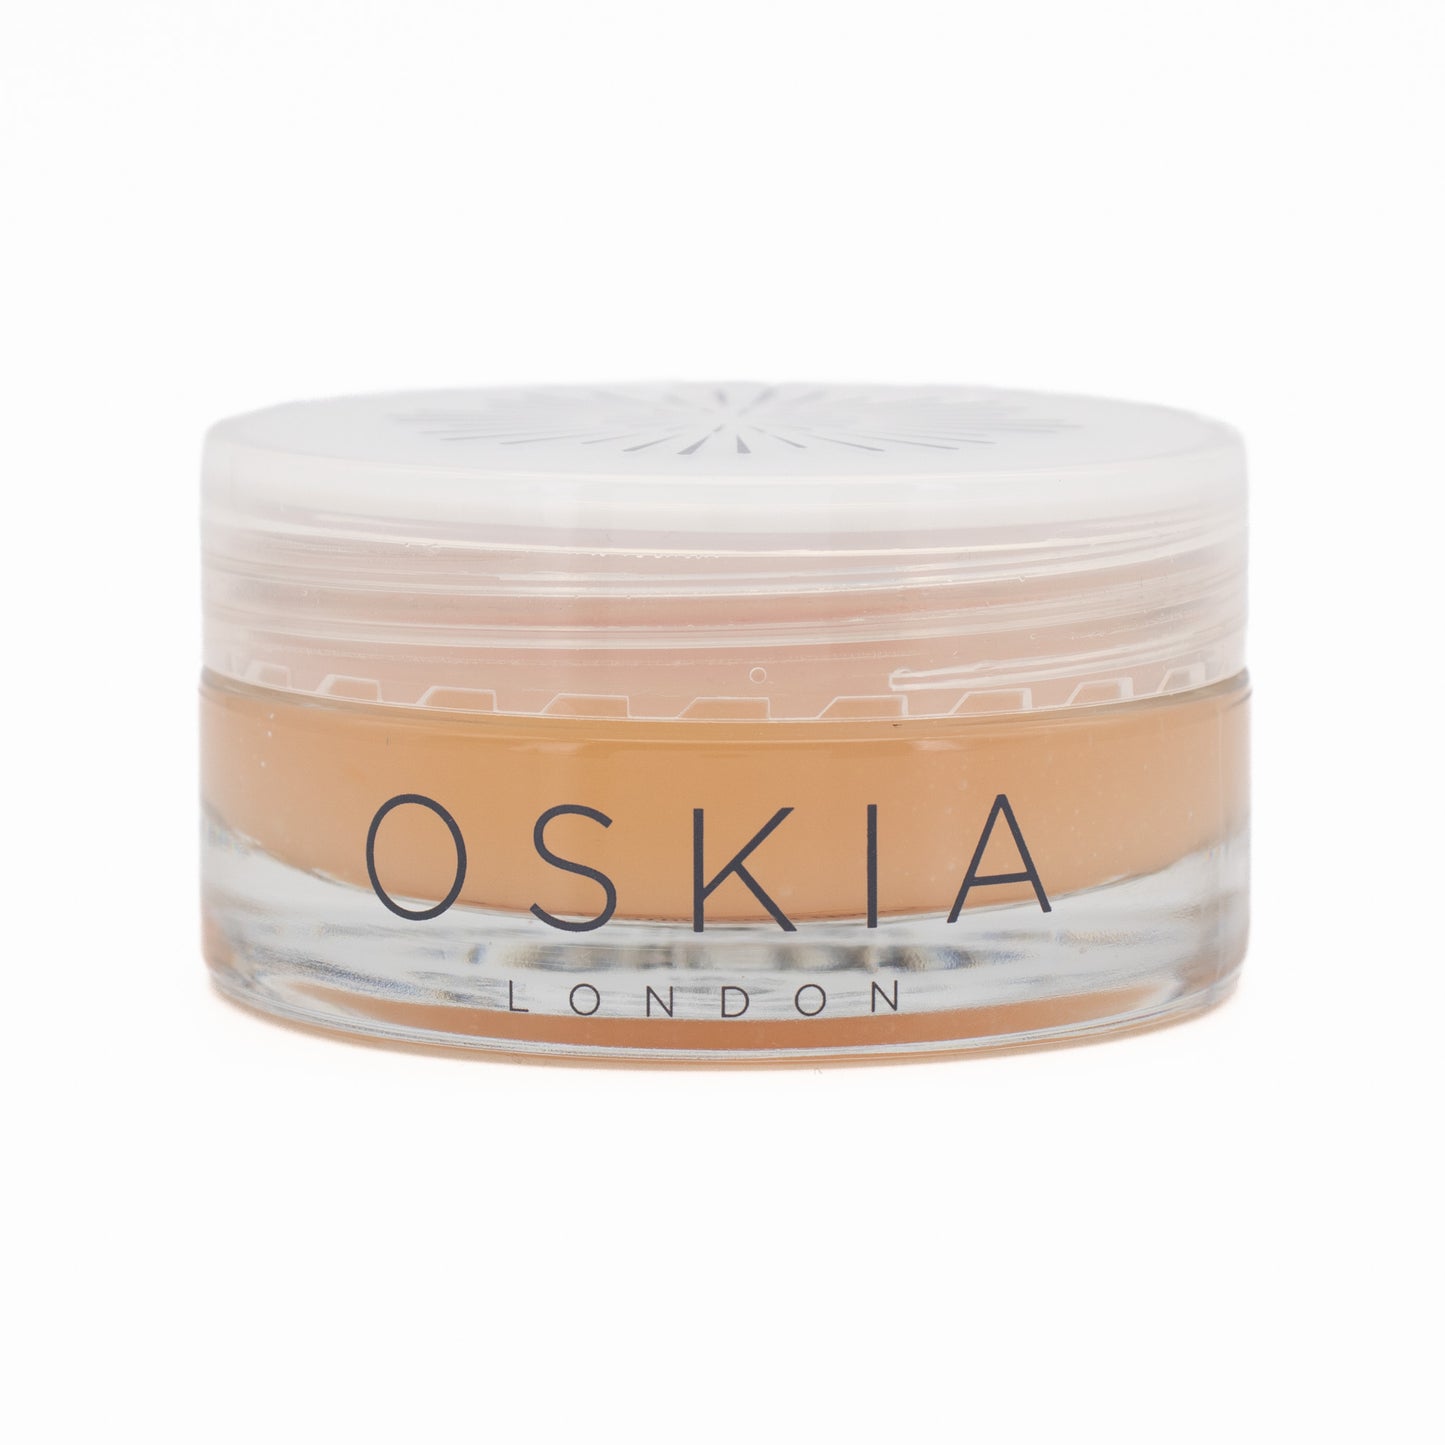 OSKIA Renaissance Brightening & Resurfacing Mask 50ml - Imperfect Box - This is Beauty UK